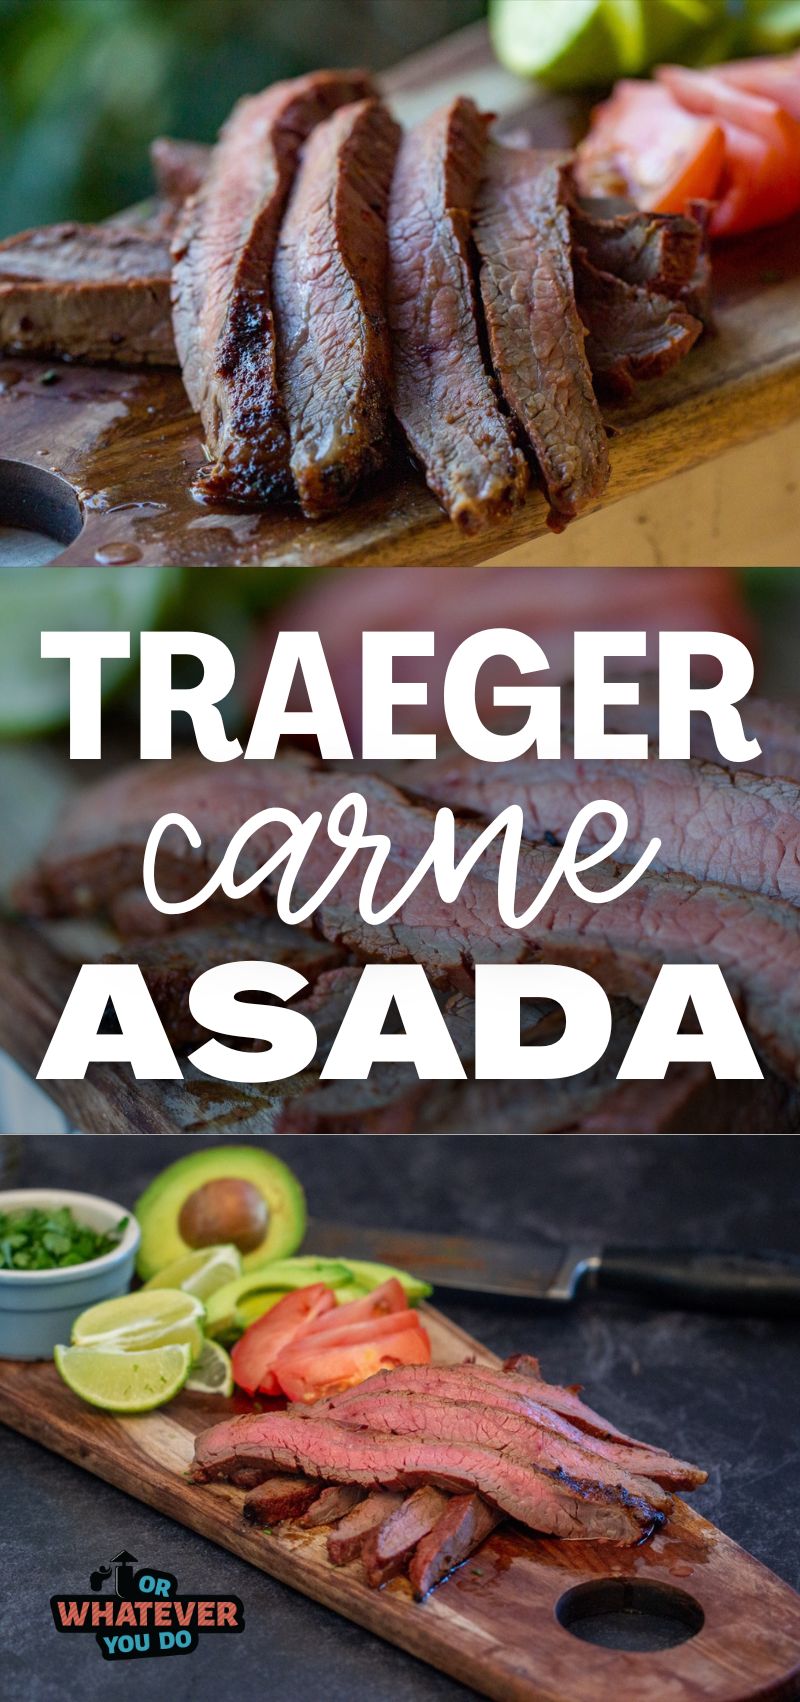 Traeger Carne Asada